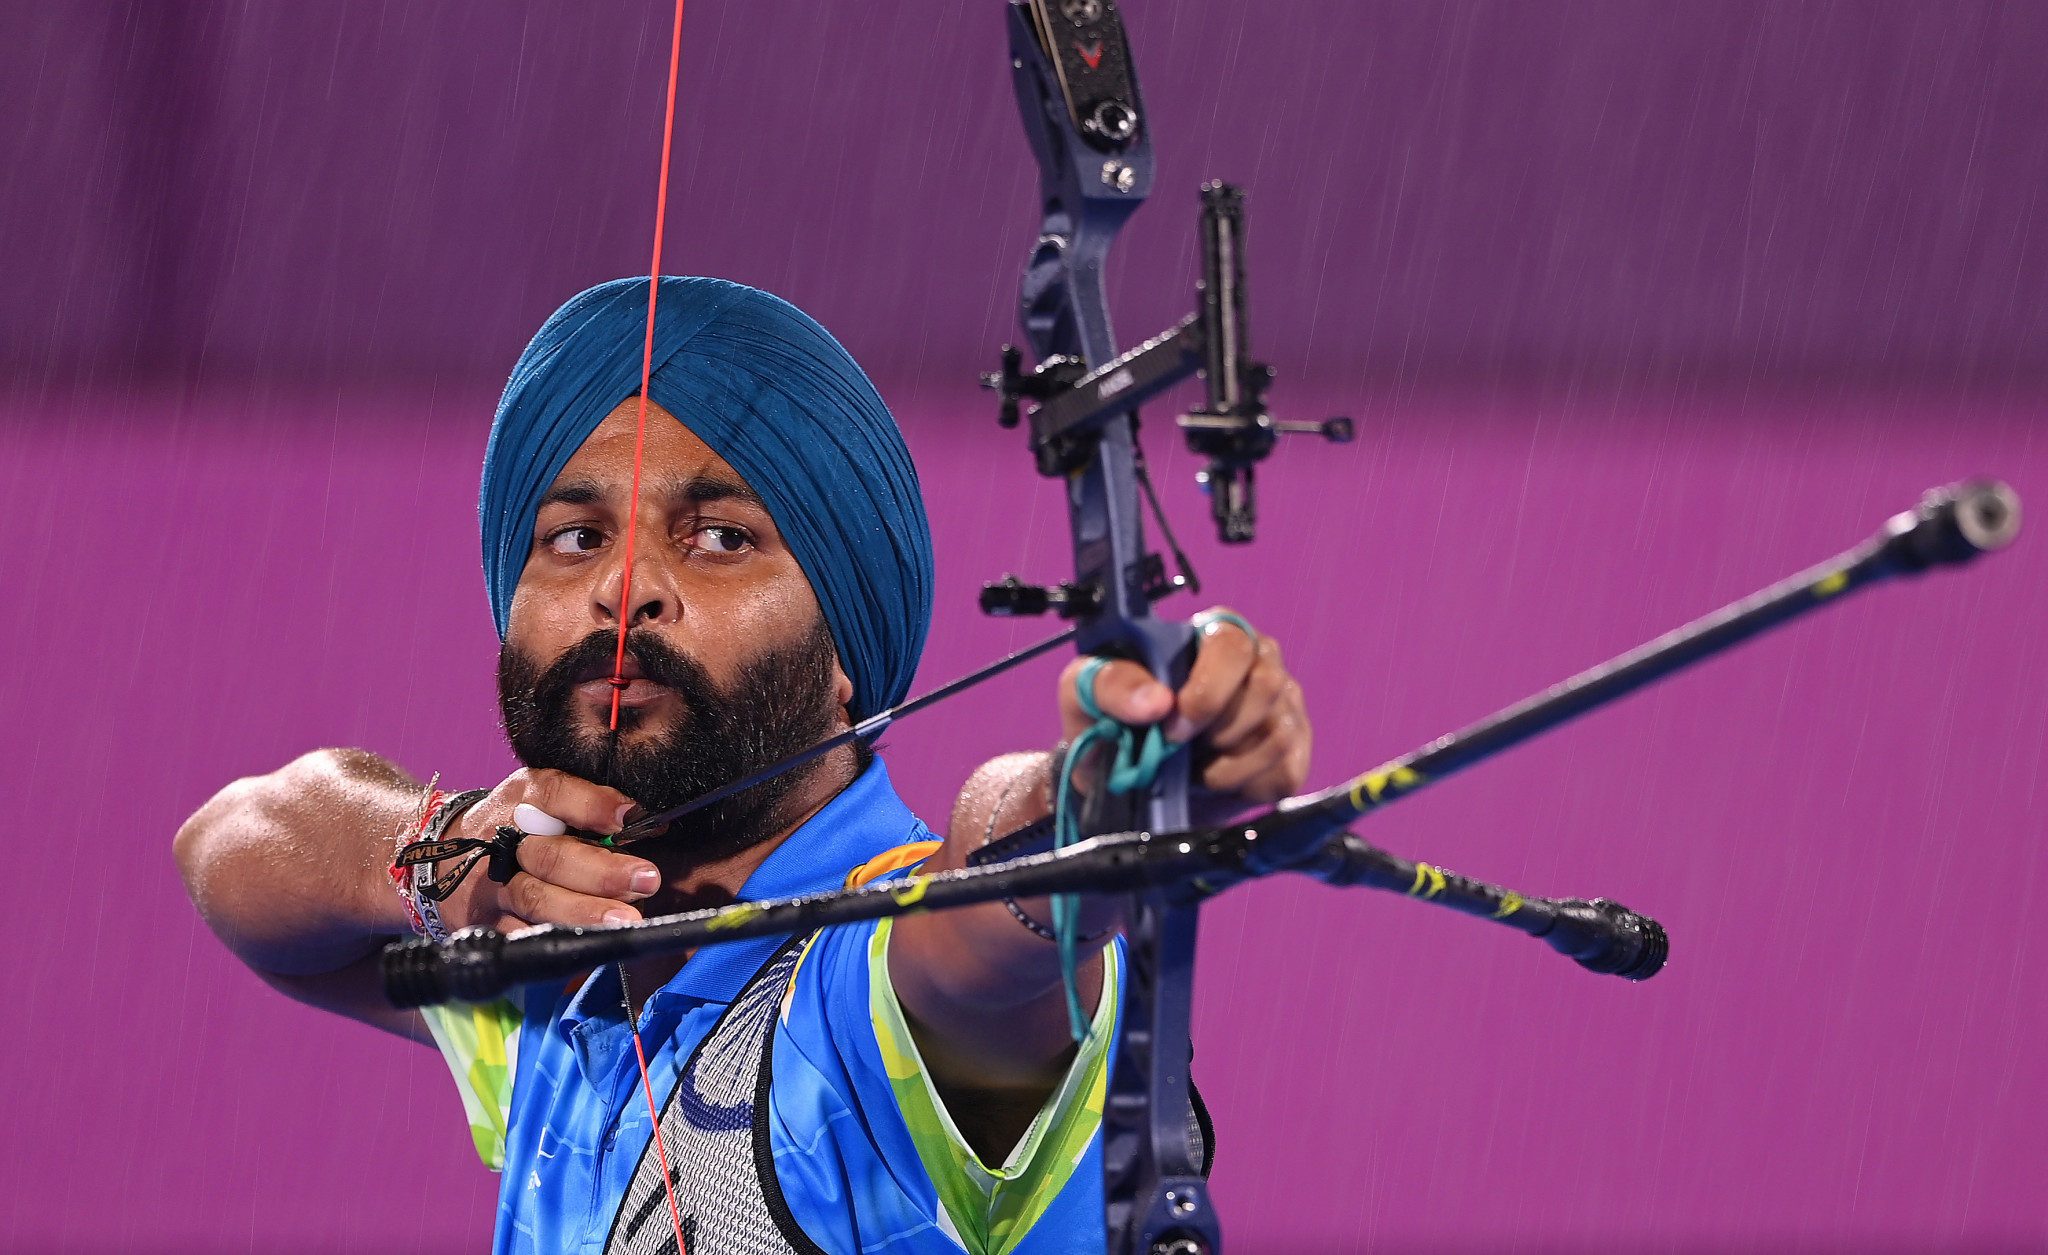 Singh honoured by Sikh community for Tokyo 2020 bronze medal